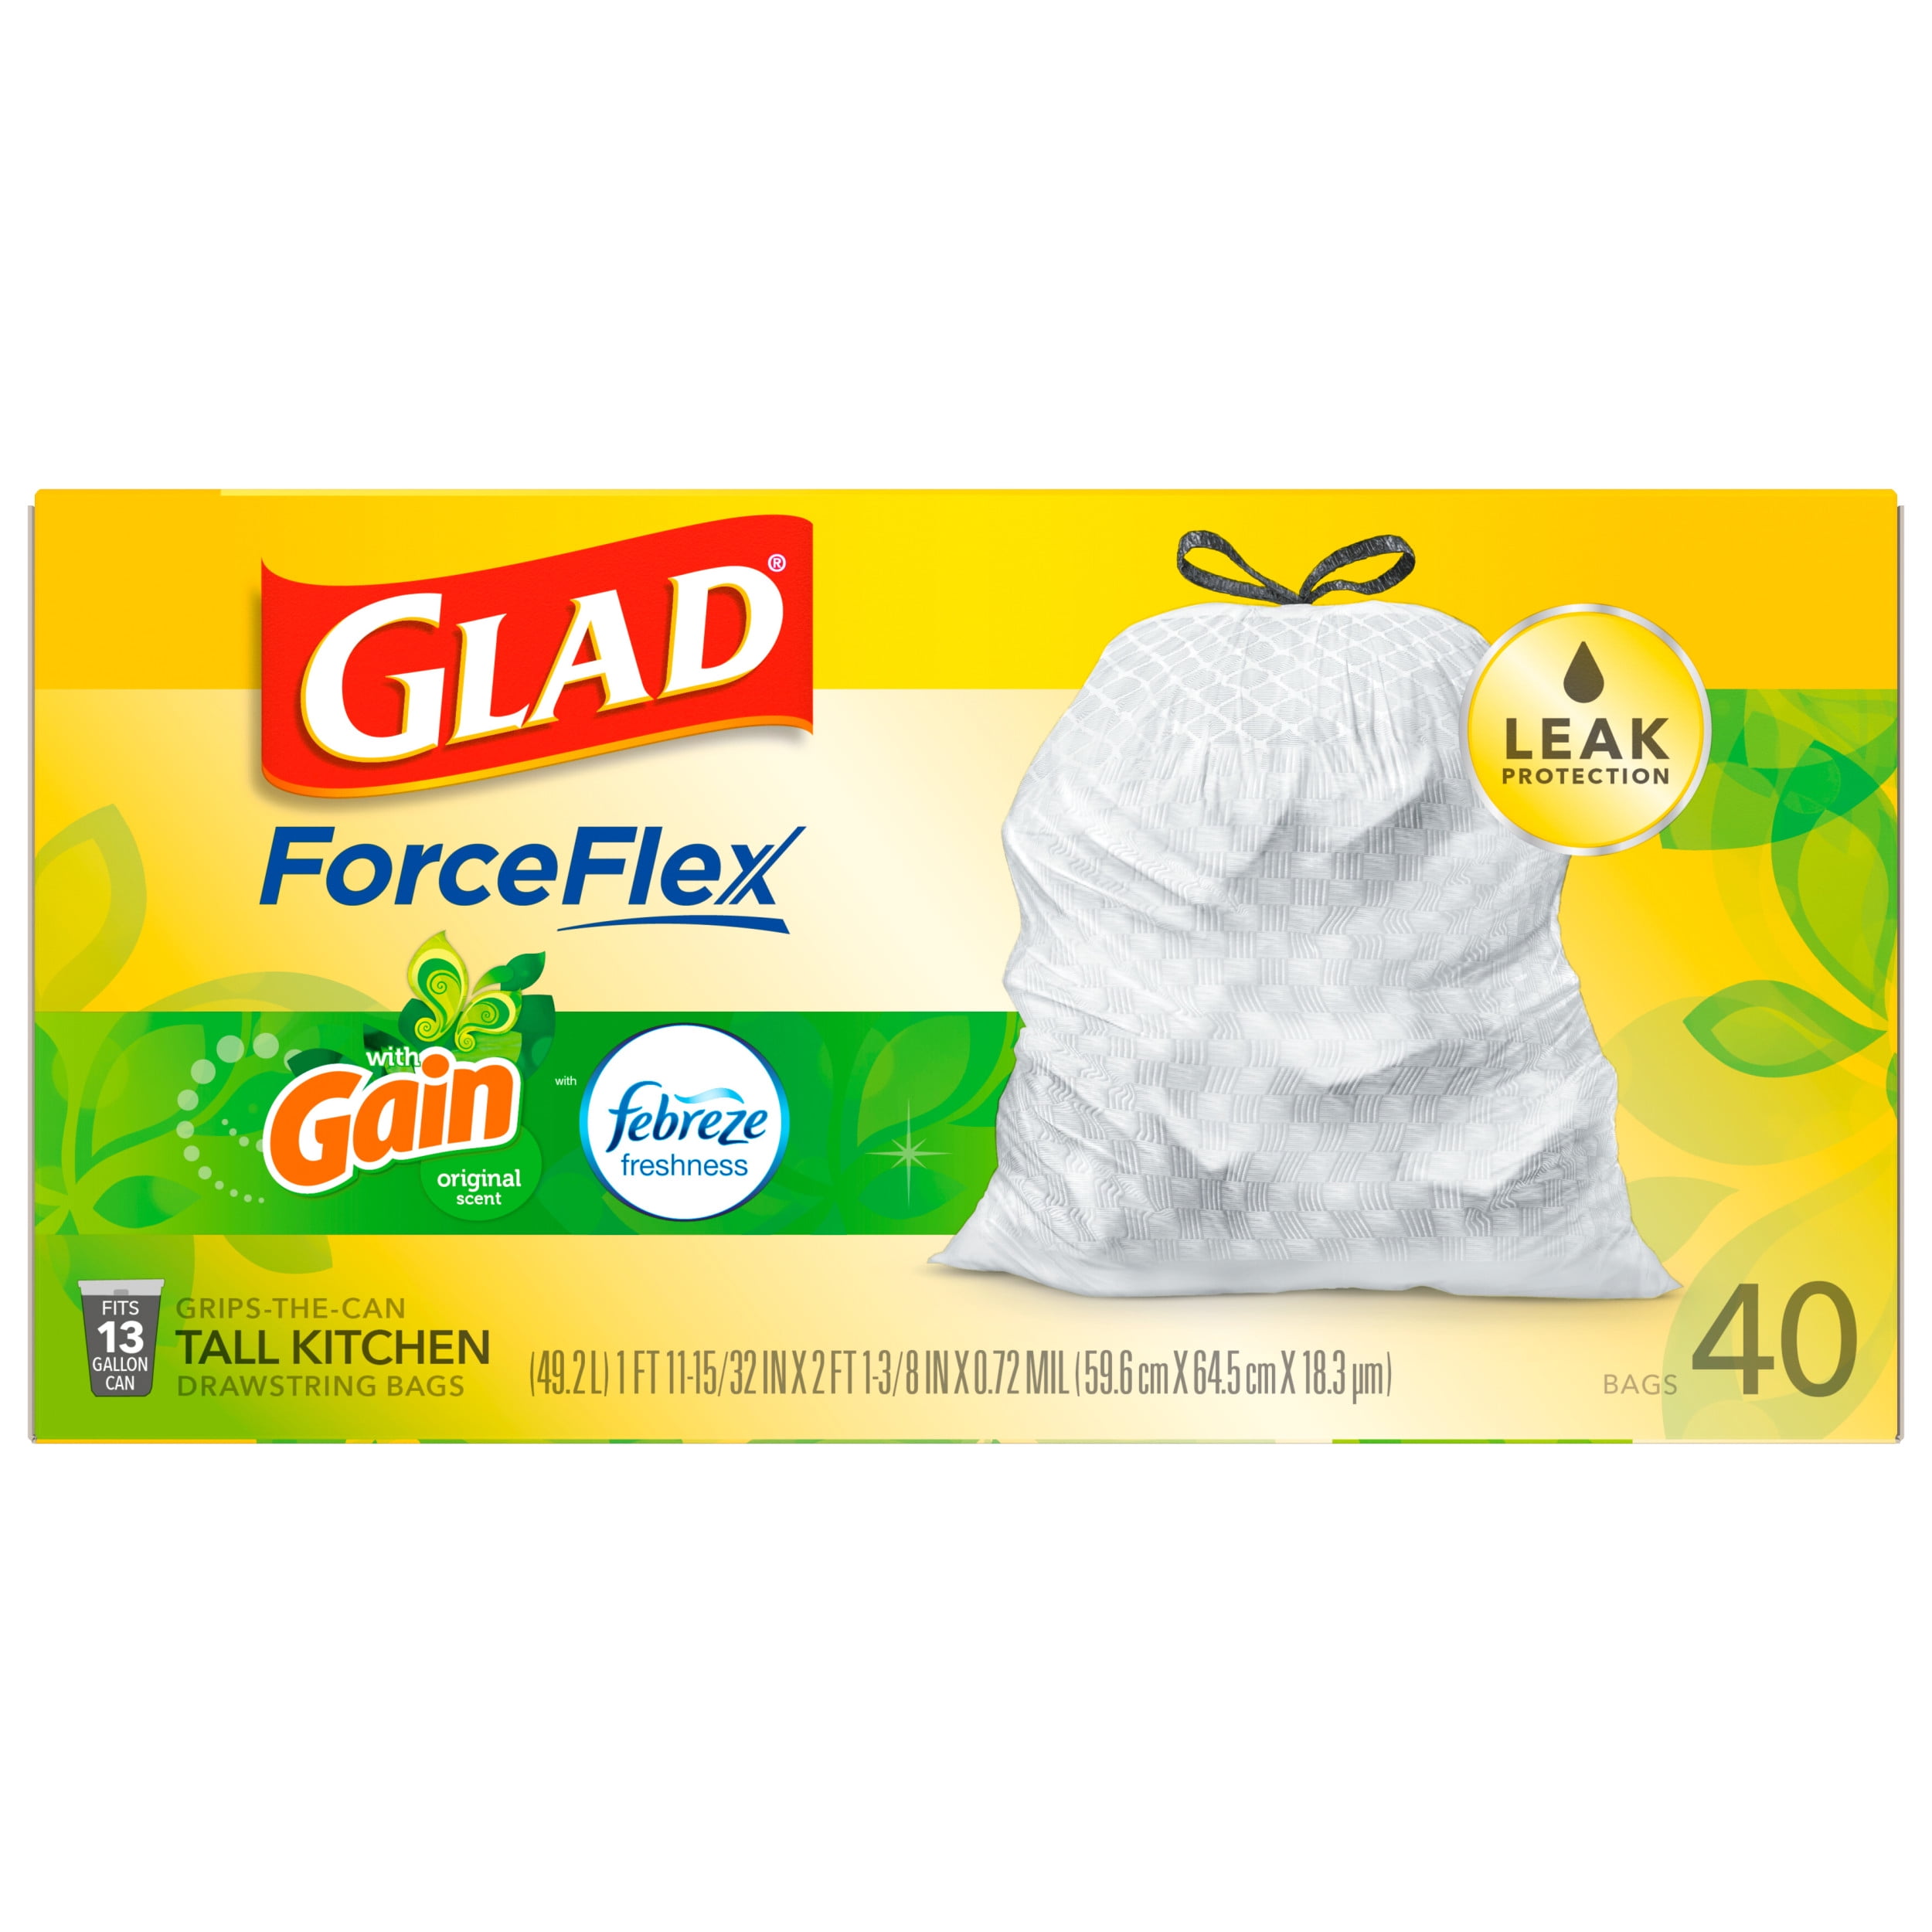 Glad ForceFlex 13 Gallon Tall Kitchen Trash Bags, Gain Original